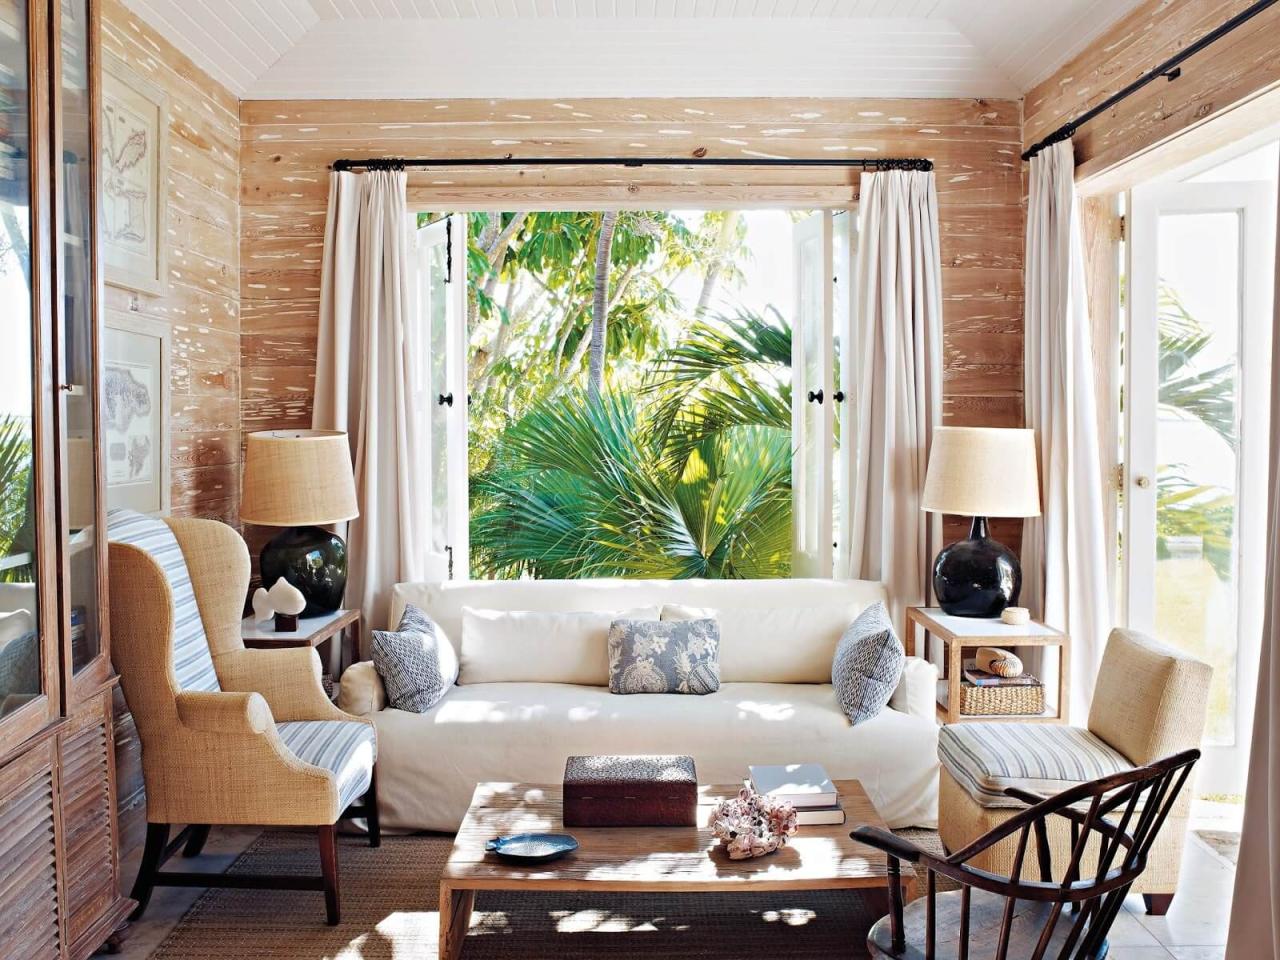 Tropical Living Room Design Ideas for an Island Getaway Feel